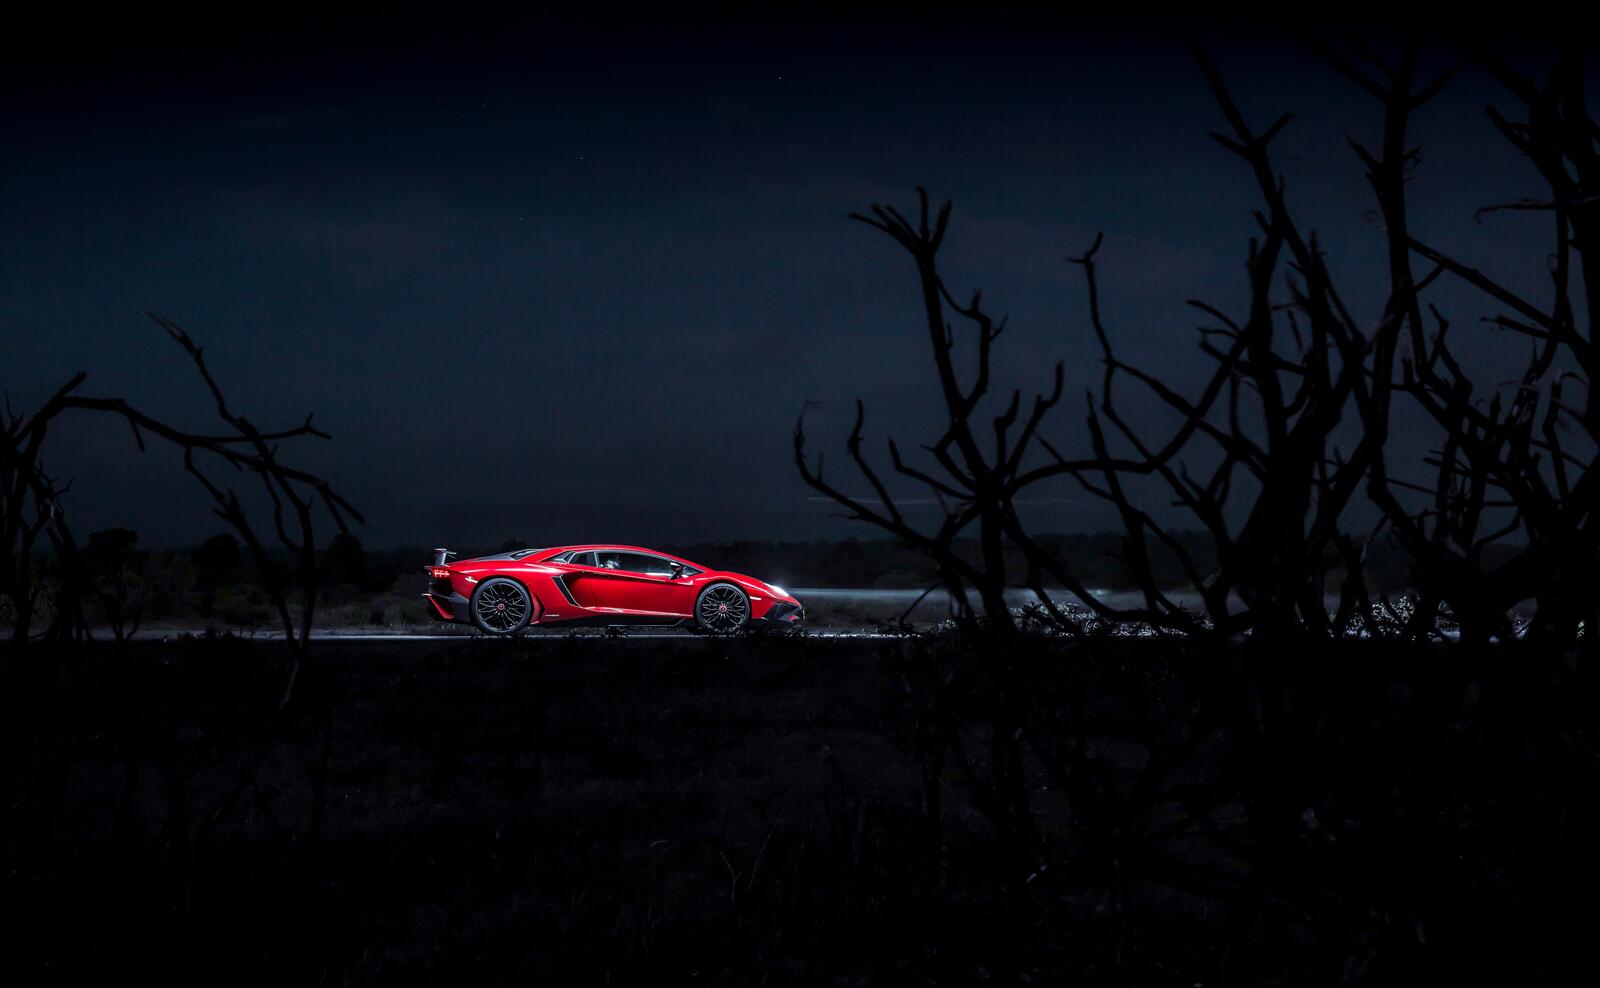 Free photo A red Lamborghini Aventador in the night.